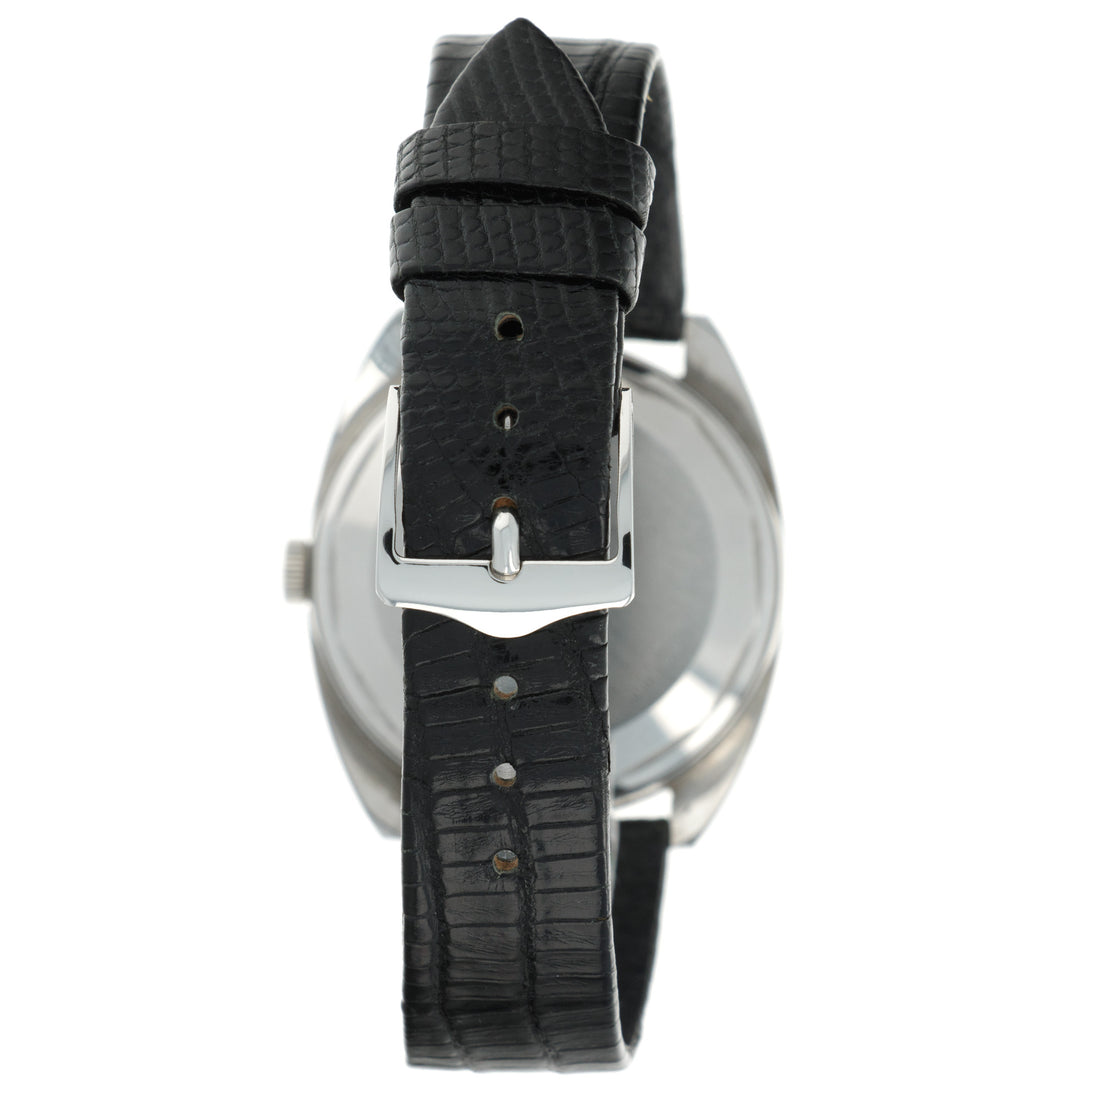 Vacheron Constantin Steel Automatic Watch Ref. 7397